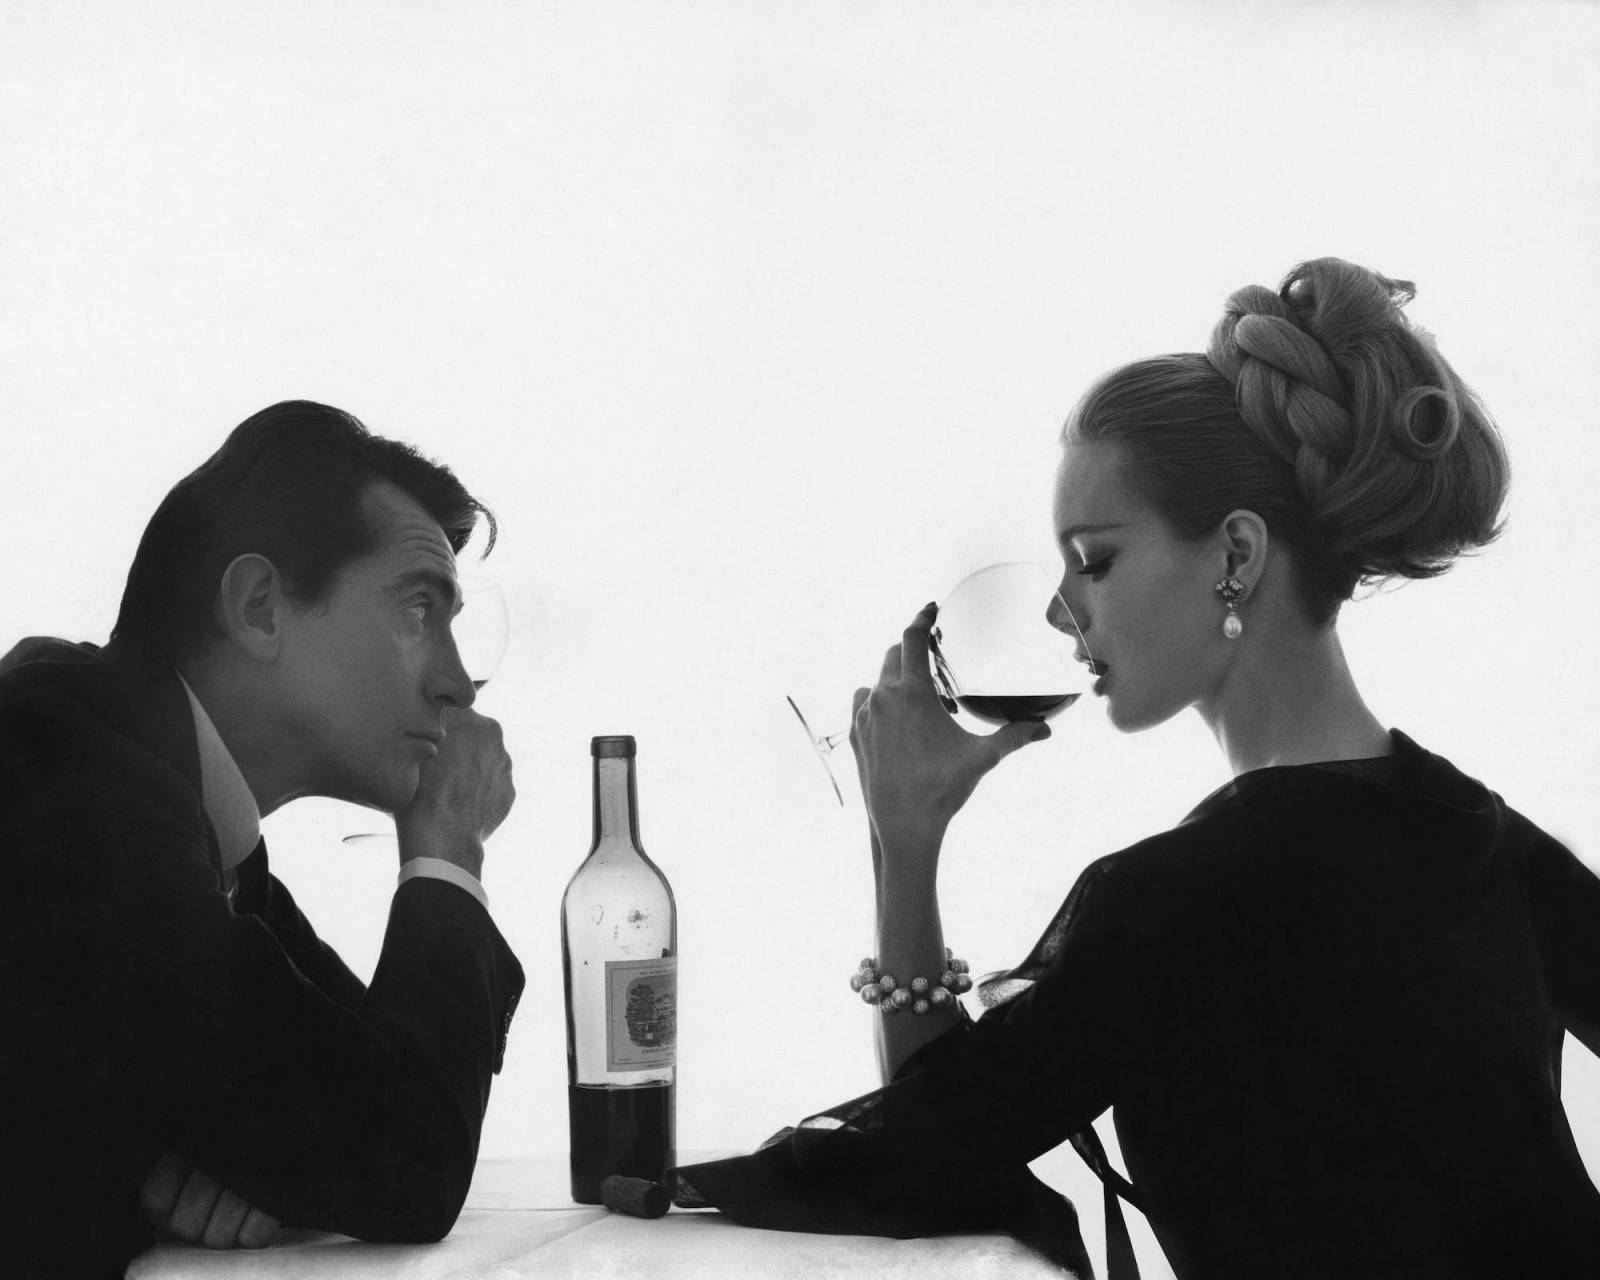 Vogue 1962 / Fot. Bert Stern/Condé Nast via Getty Images